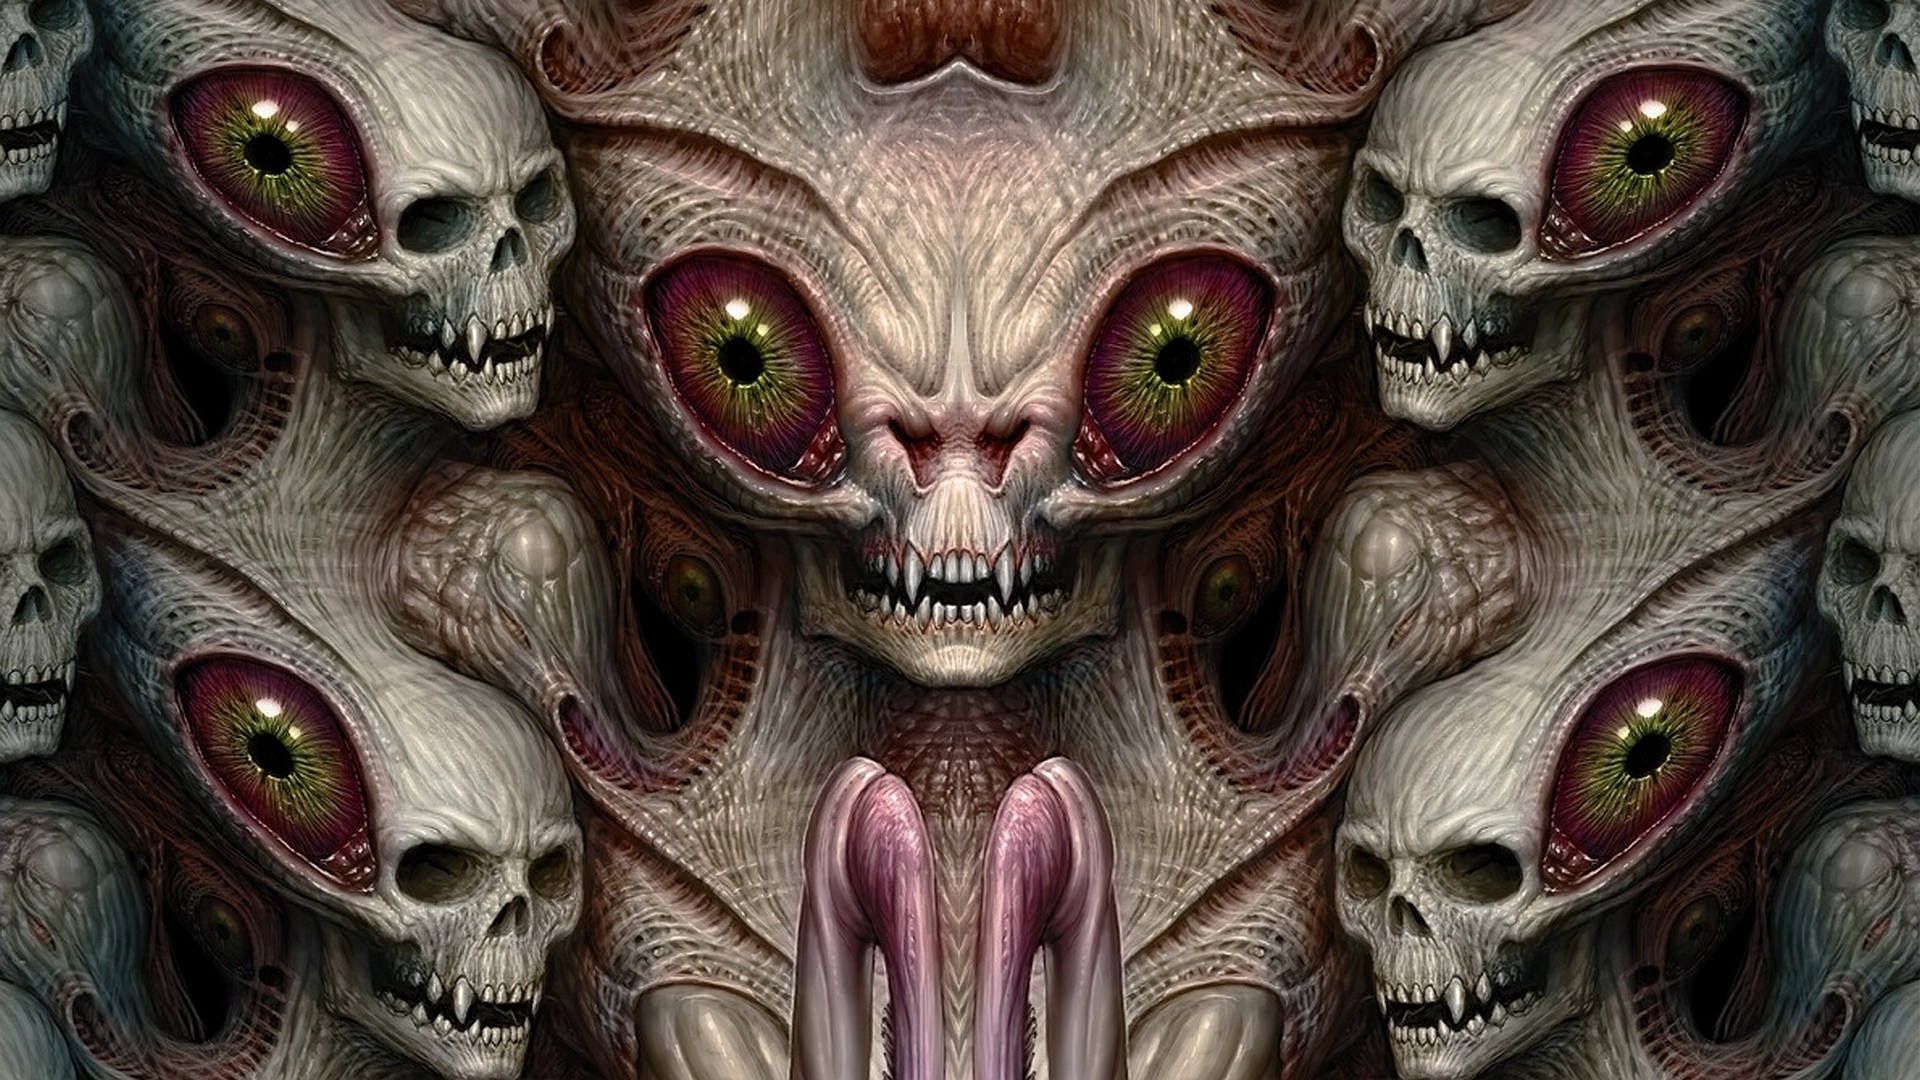 General 1920x1080 aliens creature drawing skull eyes teeth symmetry digital art closeup creepy